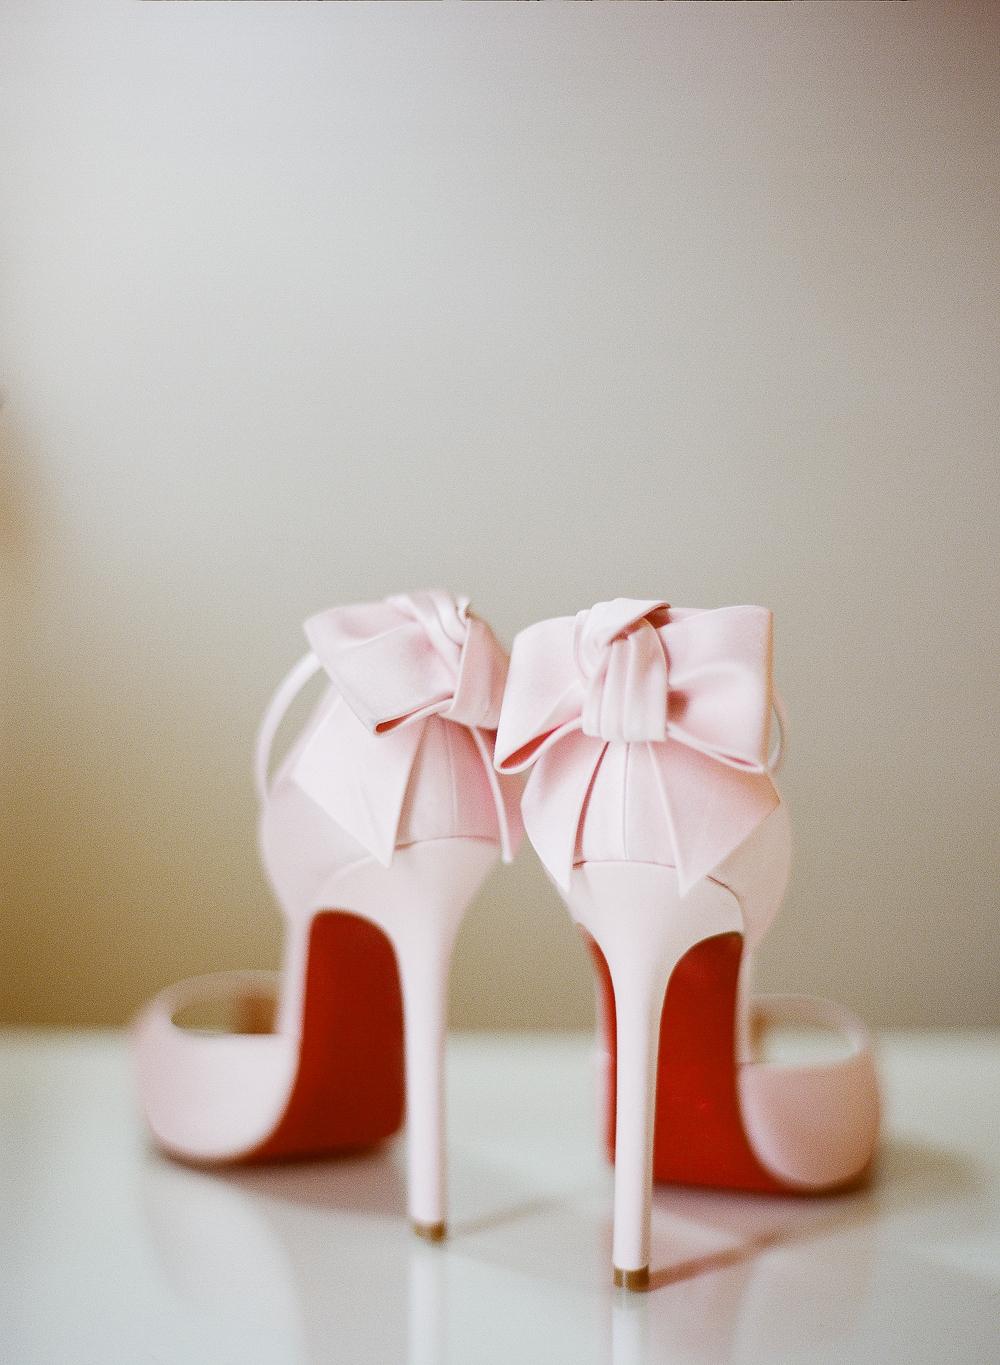 bridal louboutin wedding shoes